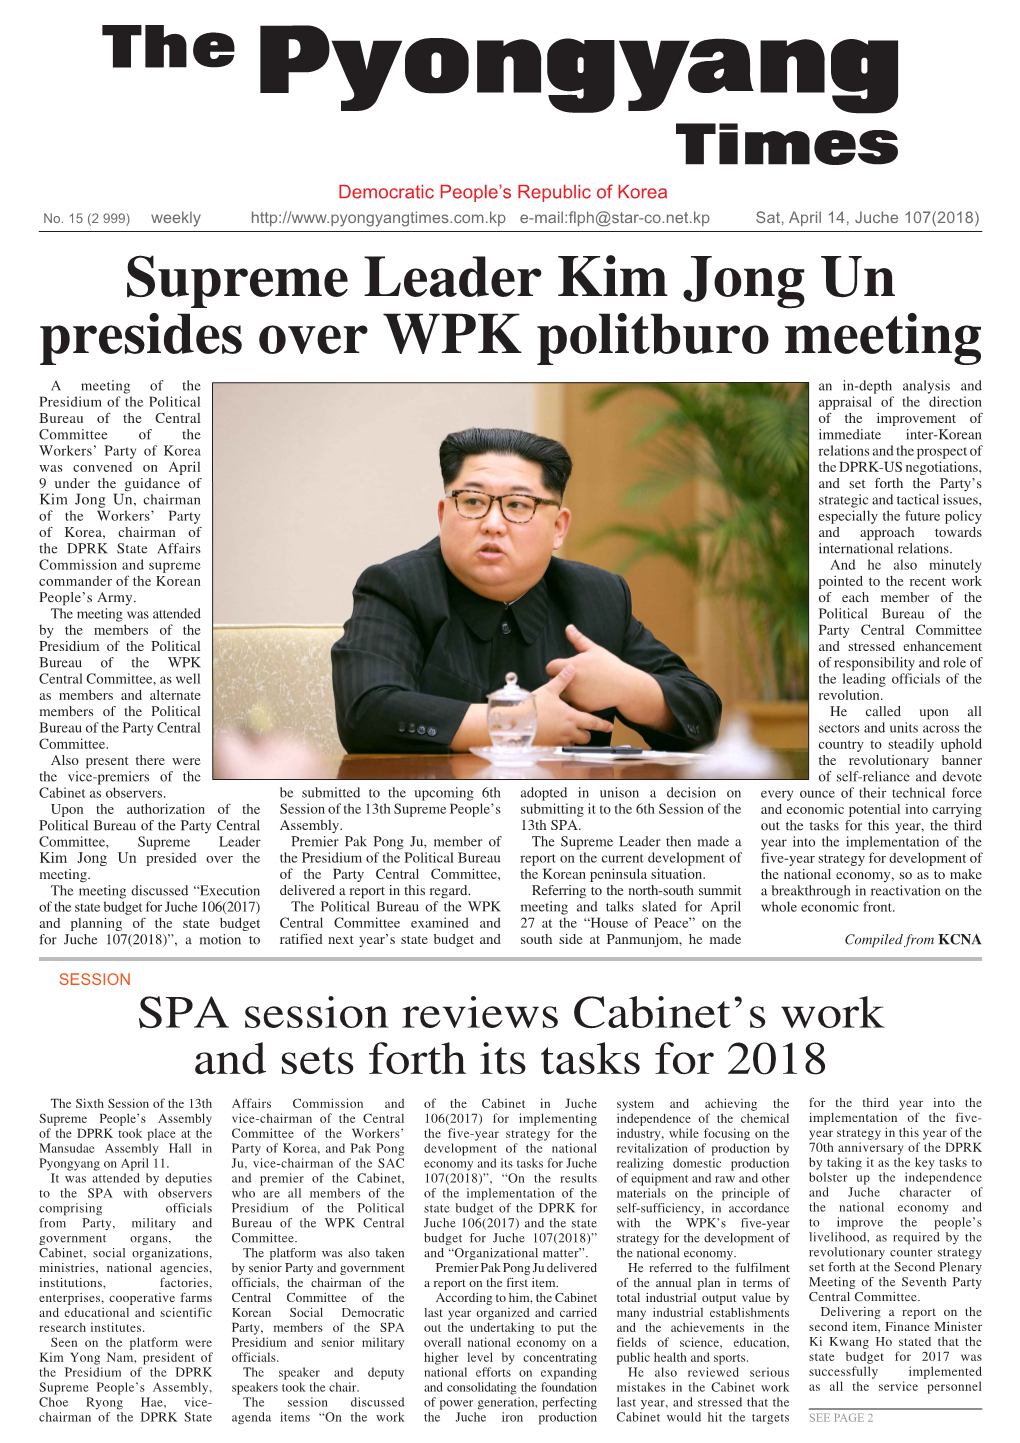 Supreme Leader Kim Jong Un Presides Over WPK Politburo Meeting